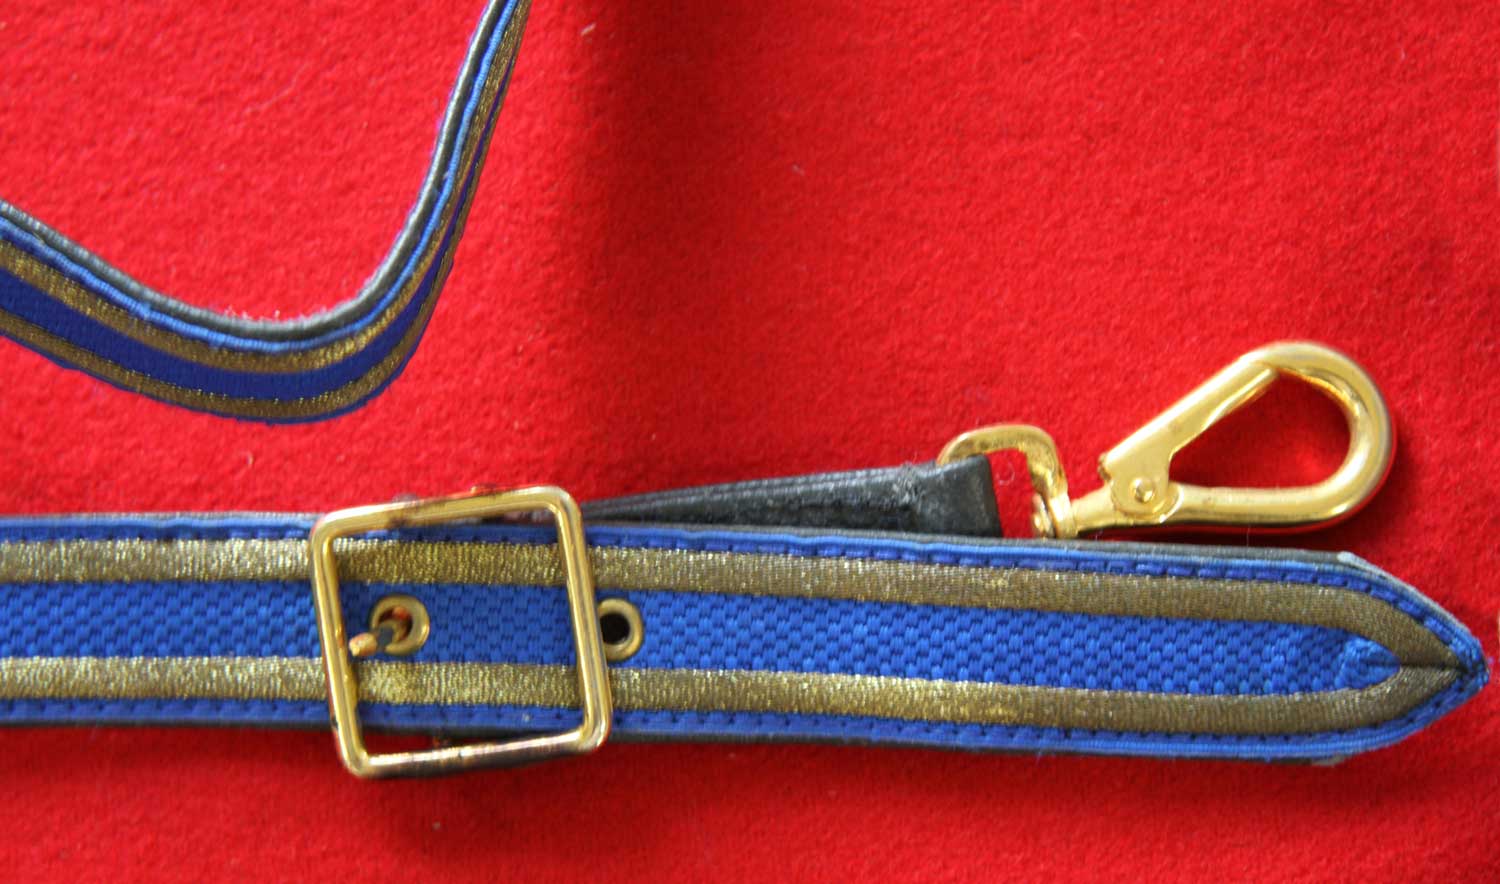 British, Royal Air Force Waist Belt and Slings - Click Image to Close